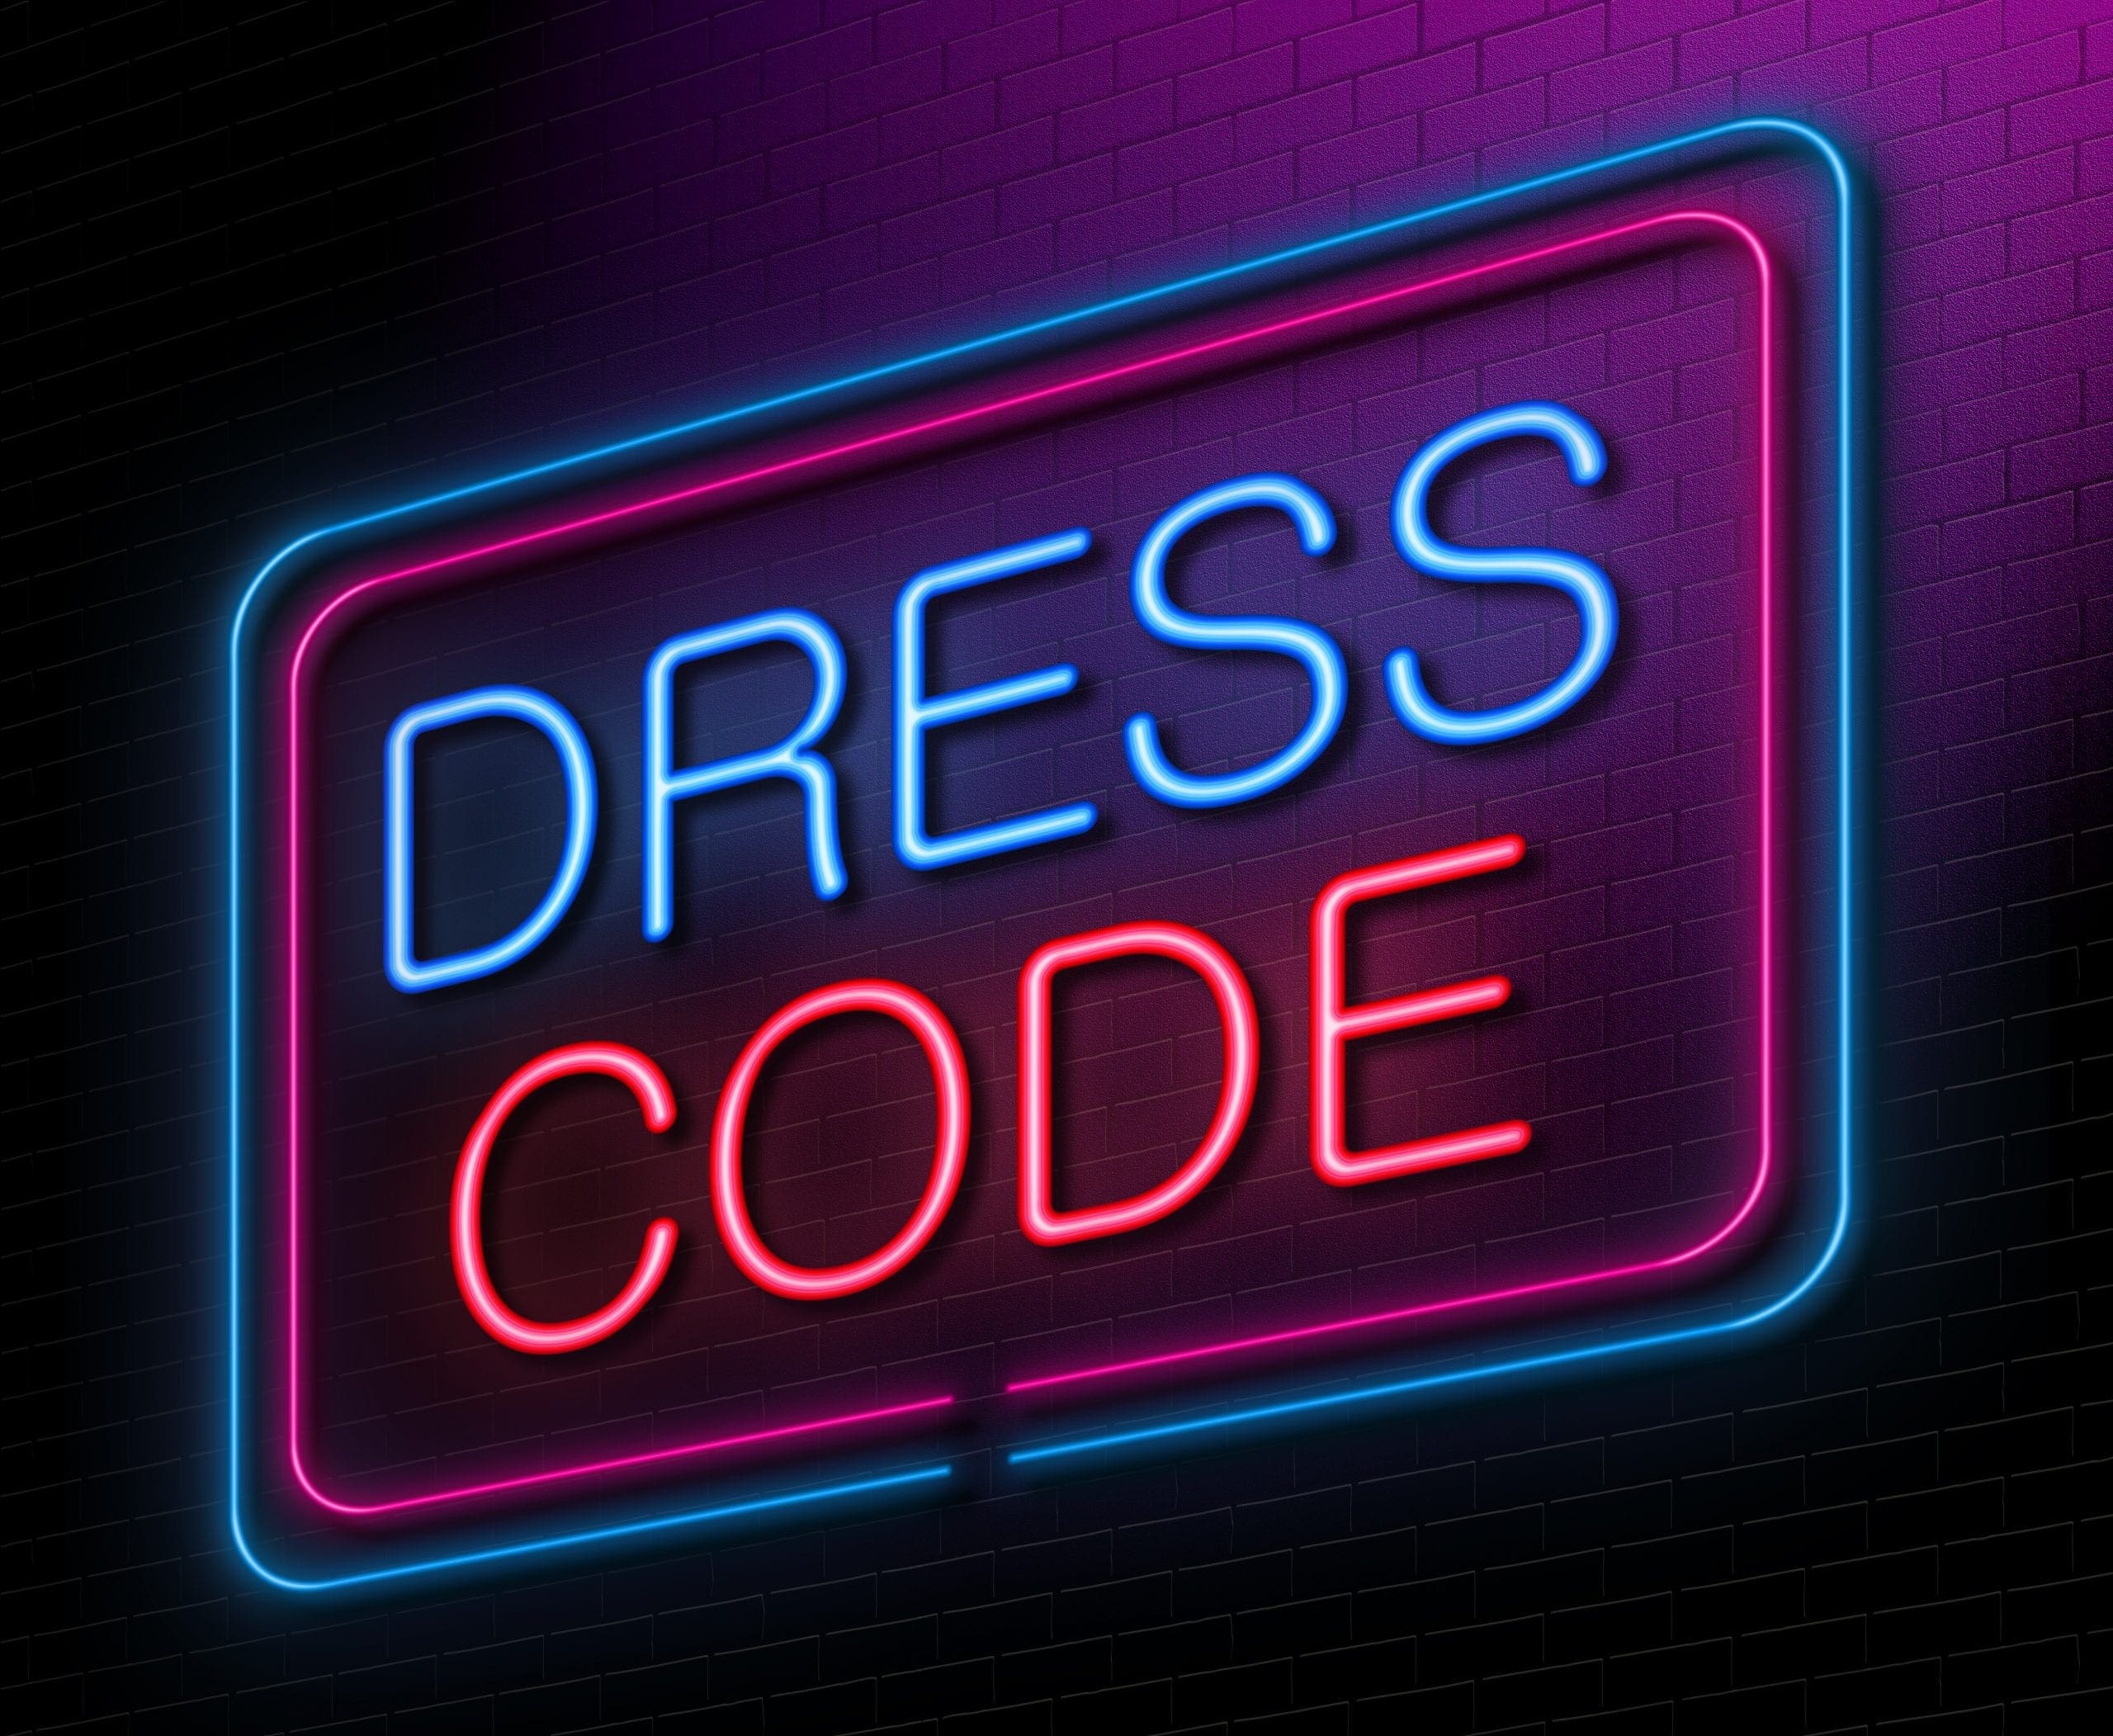 The Dress Code Struggle